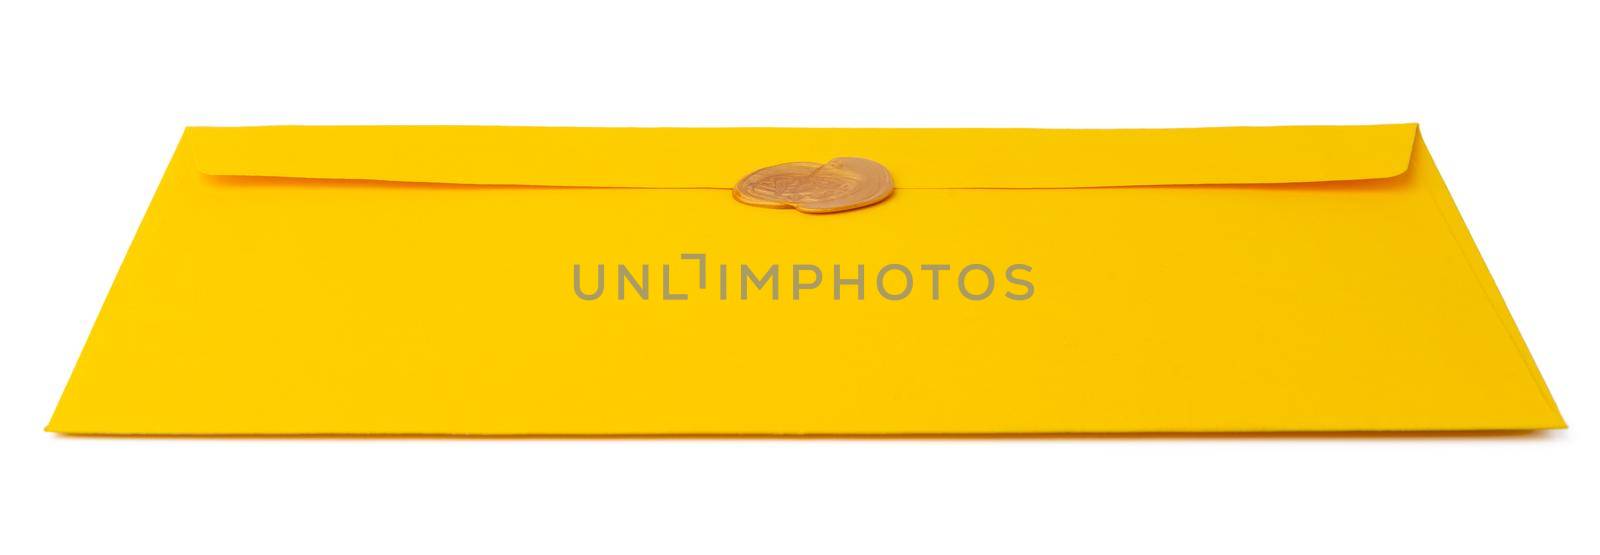 yellow envelope isolated on white background by Fabrikasimf